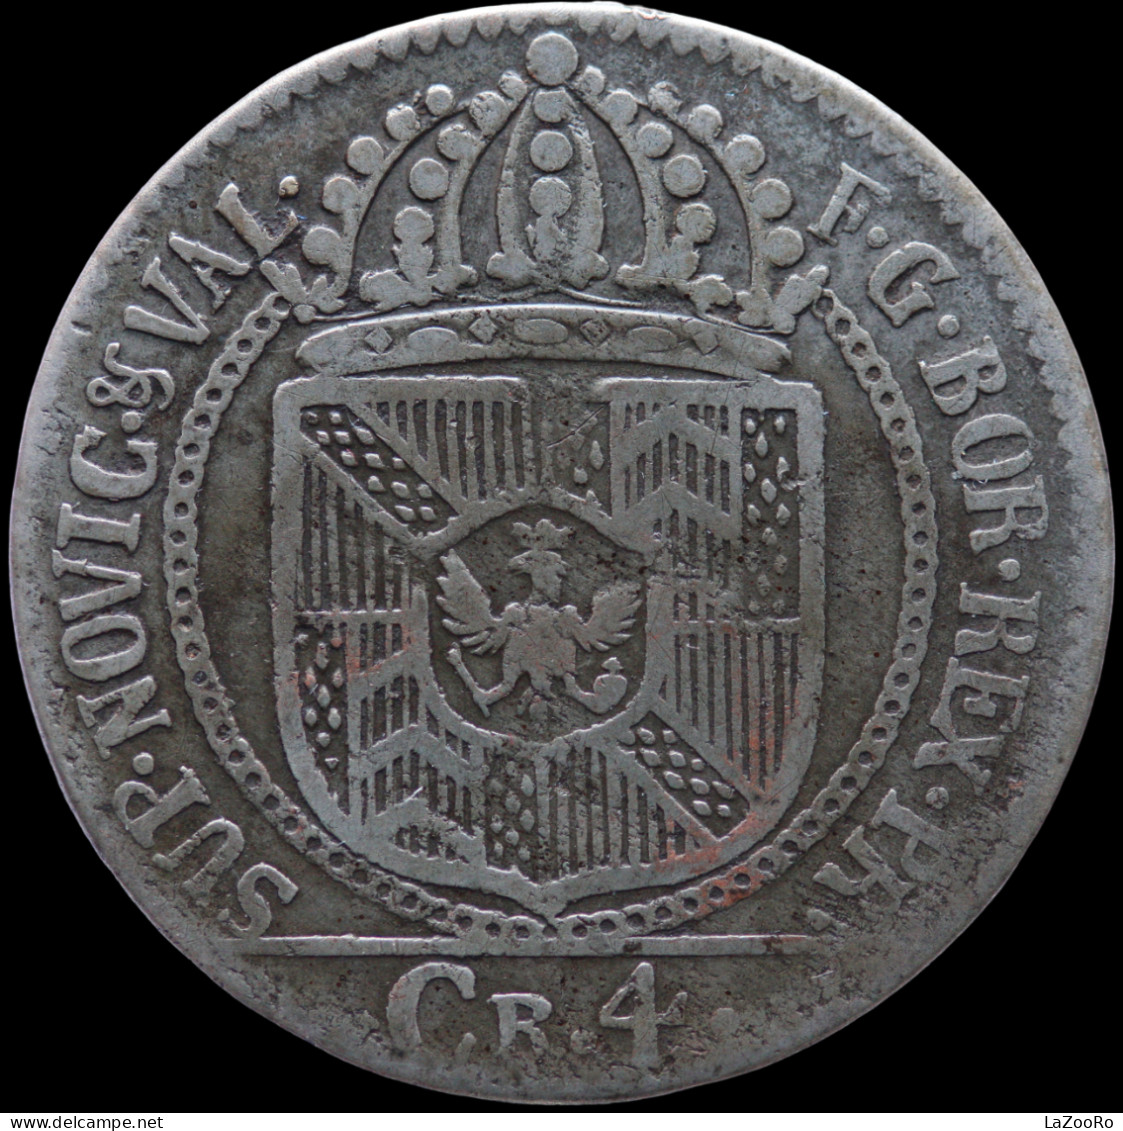 LaZooRo: Switzerland NEUCHATEL 4 Kreuzer 1790 VF - Silver - Koningen Van Pruisen